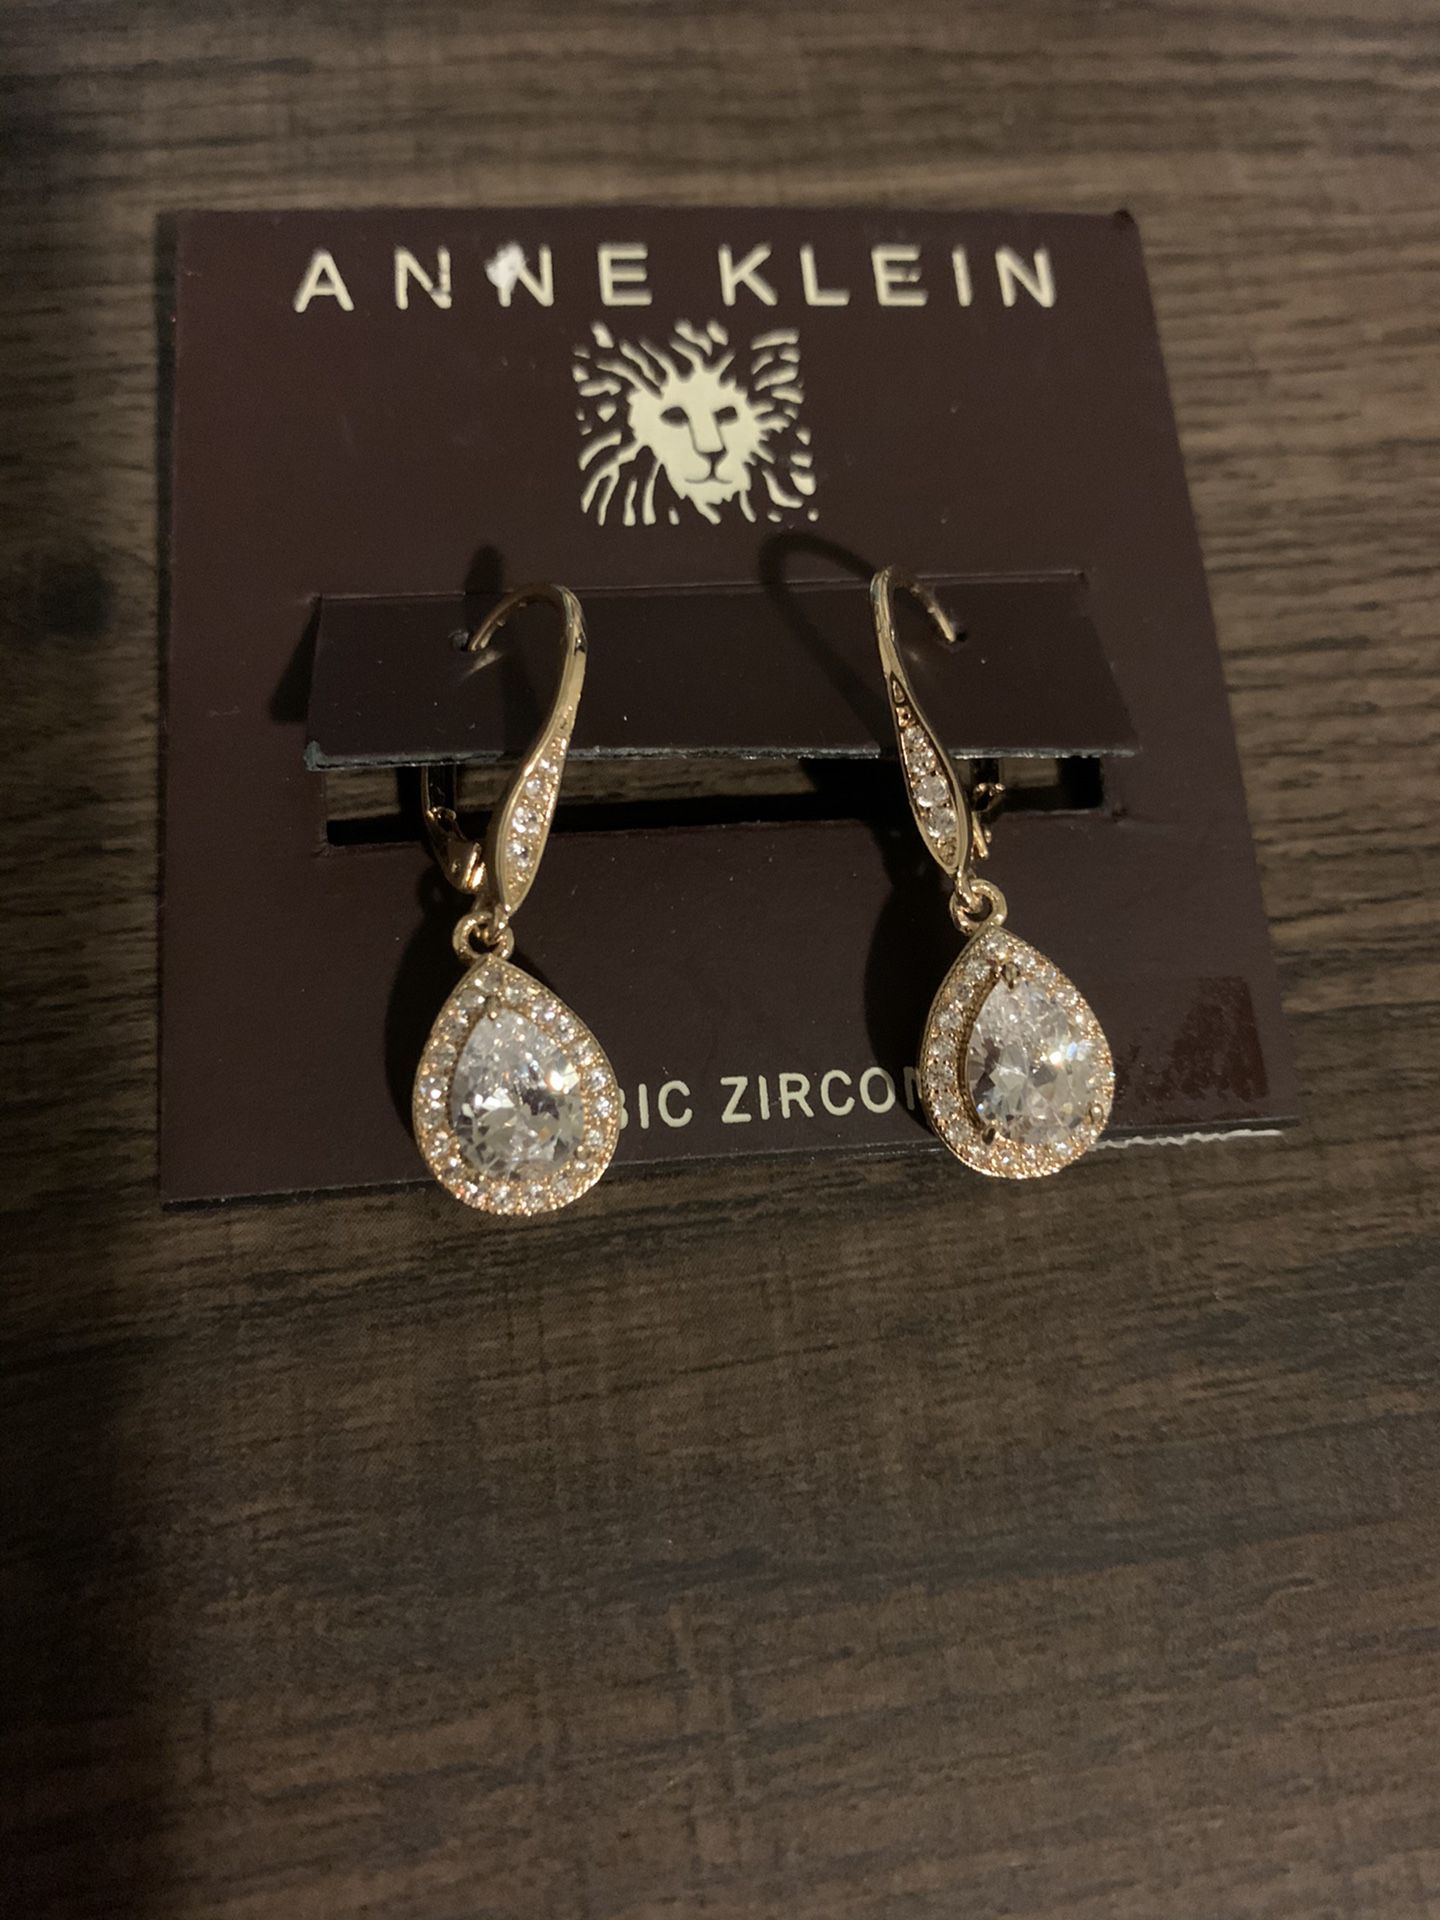 Anne Klein Cubic Circonia earings